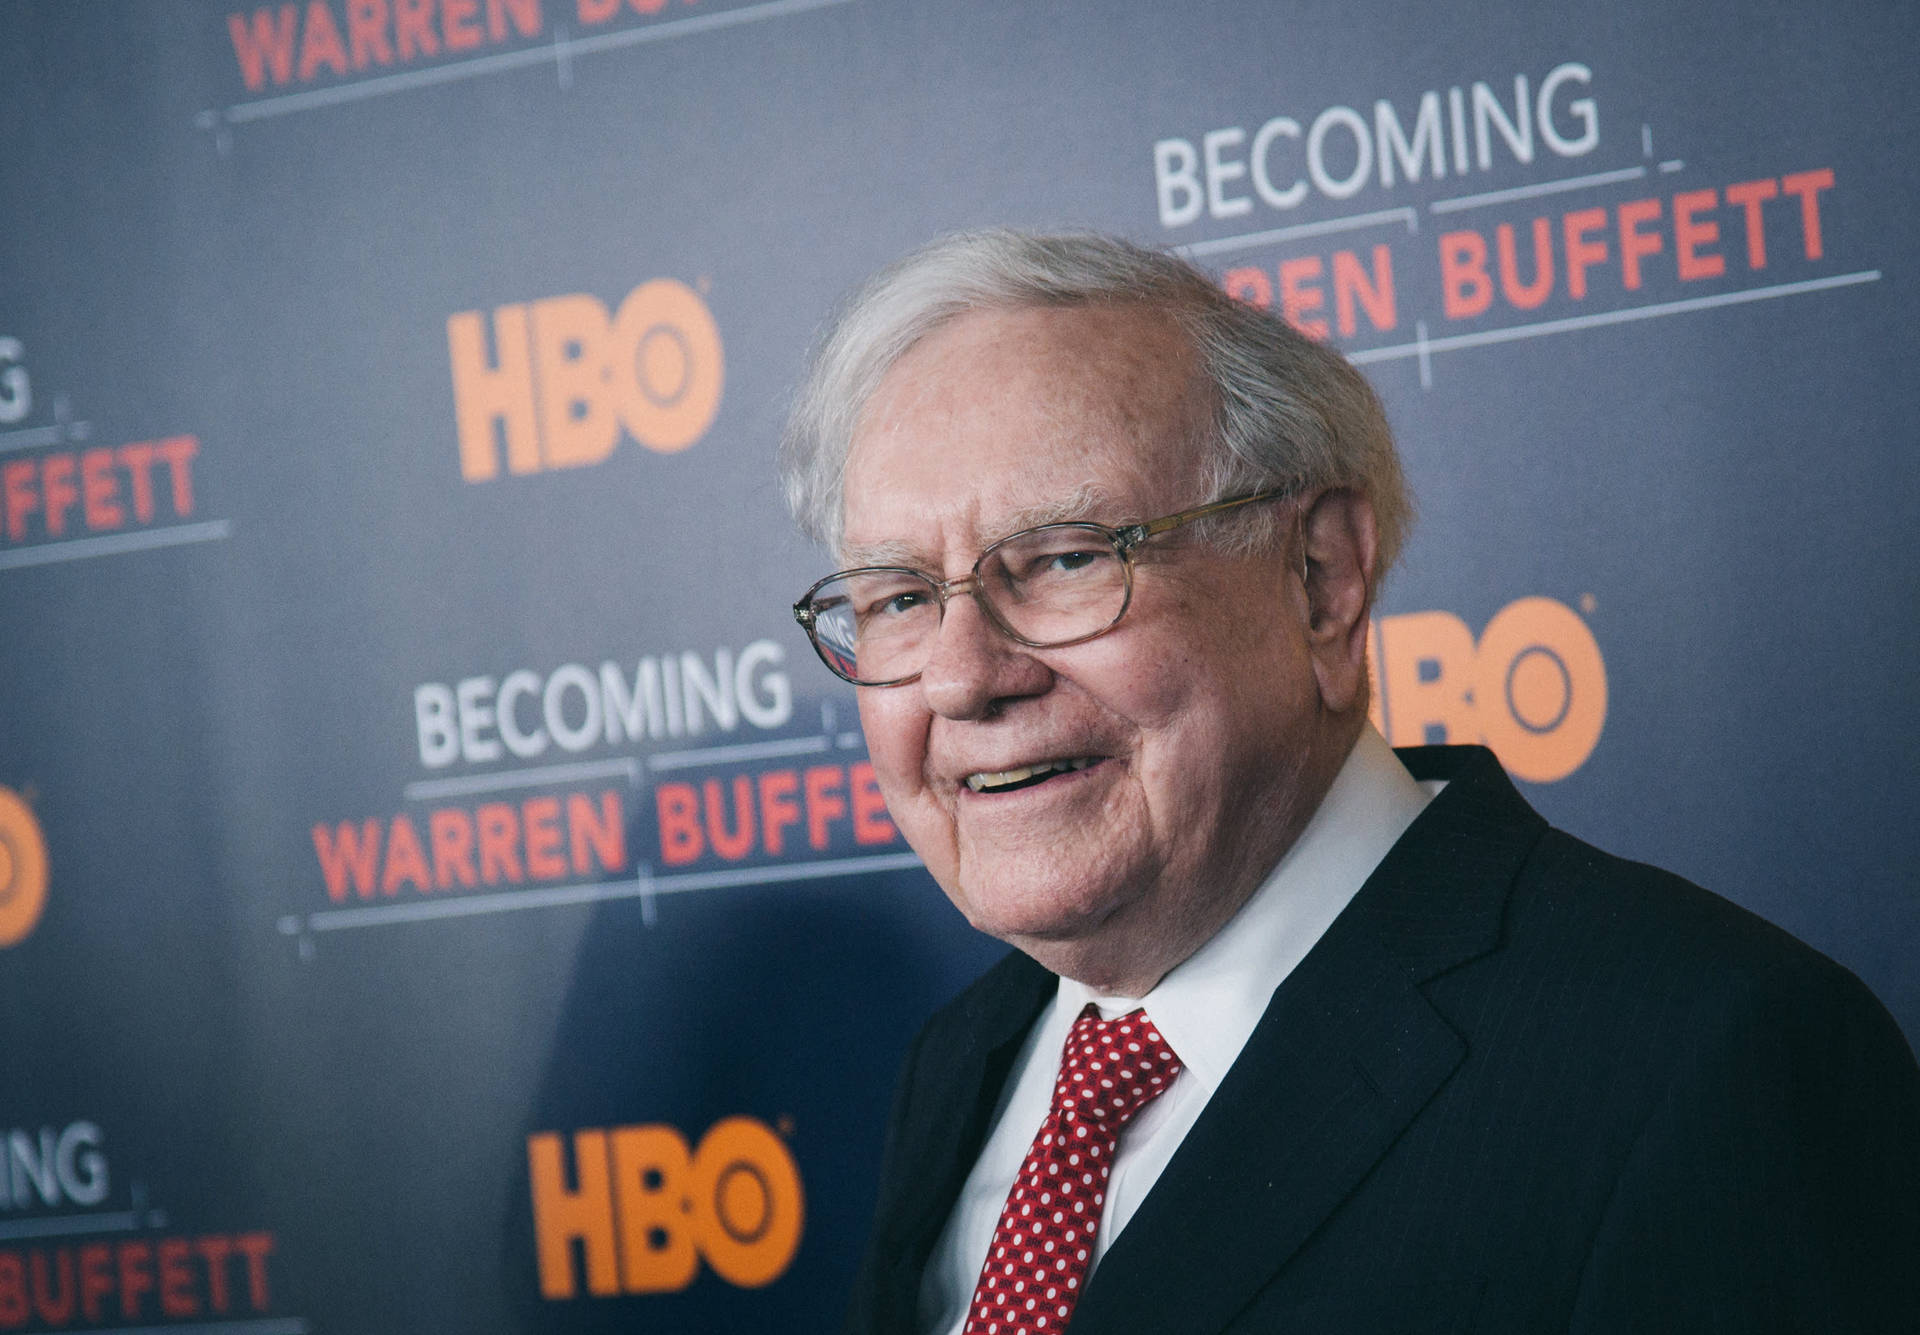 Becoming Warren Buffett Hbo Screening Wallpaper